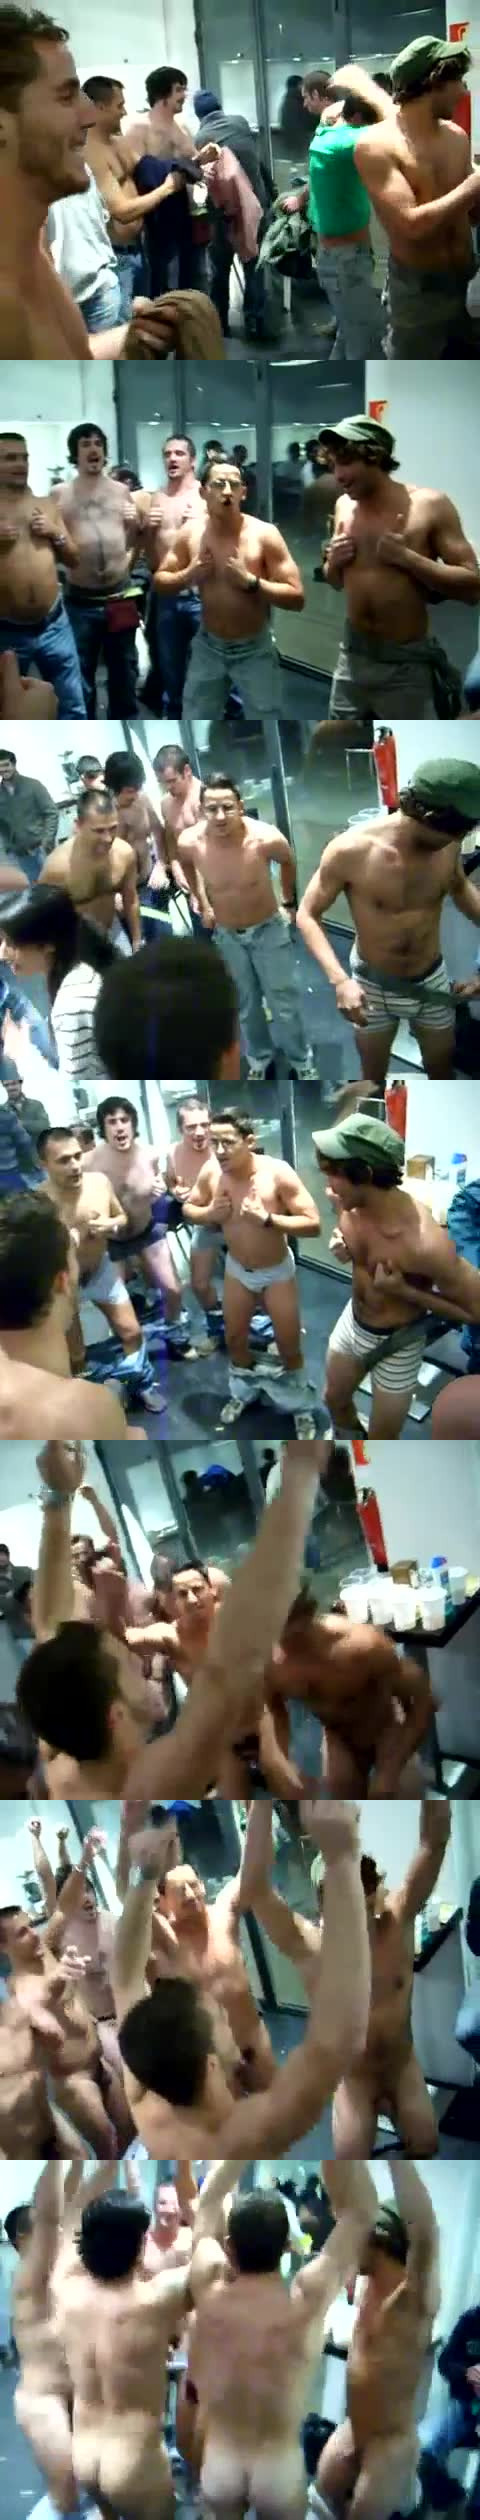 ruggers celebrating lockerroom stripping naked